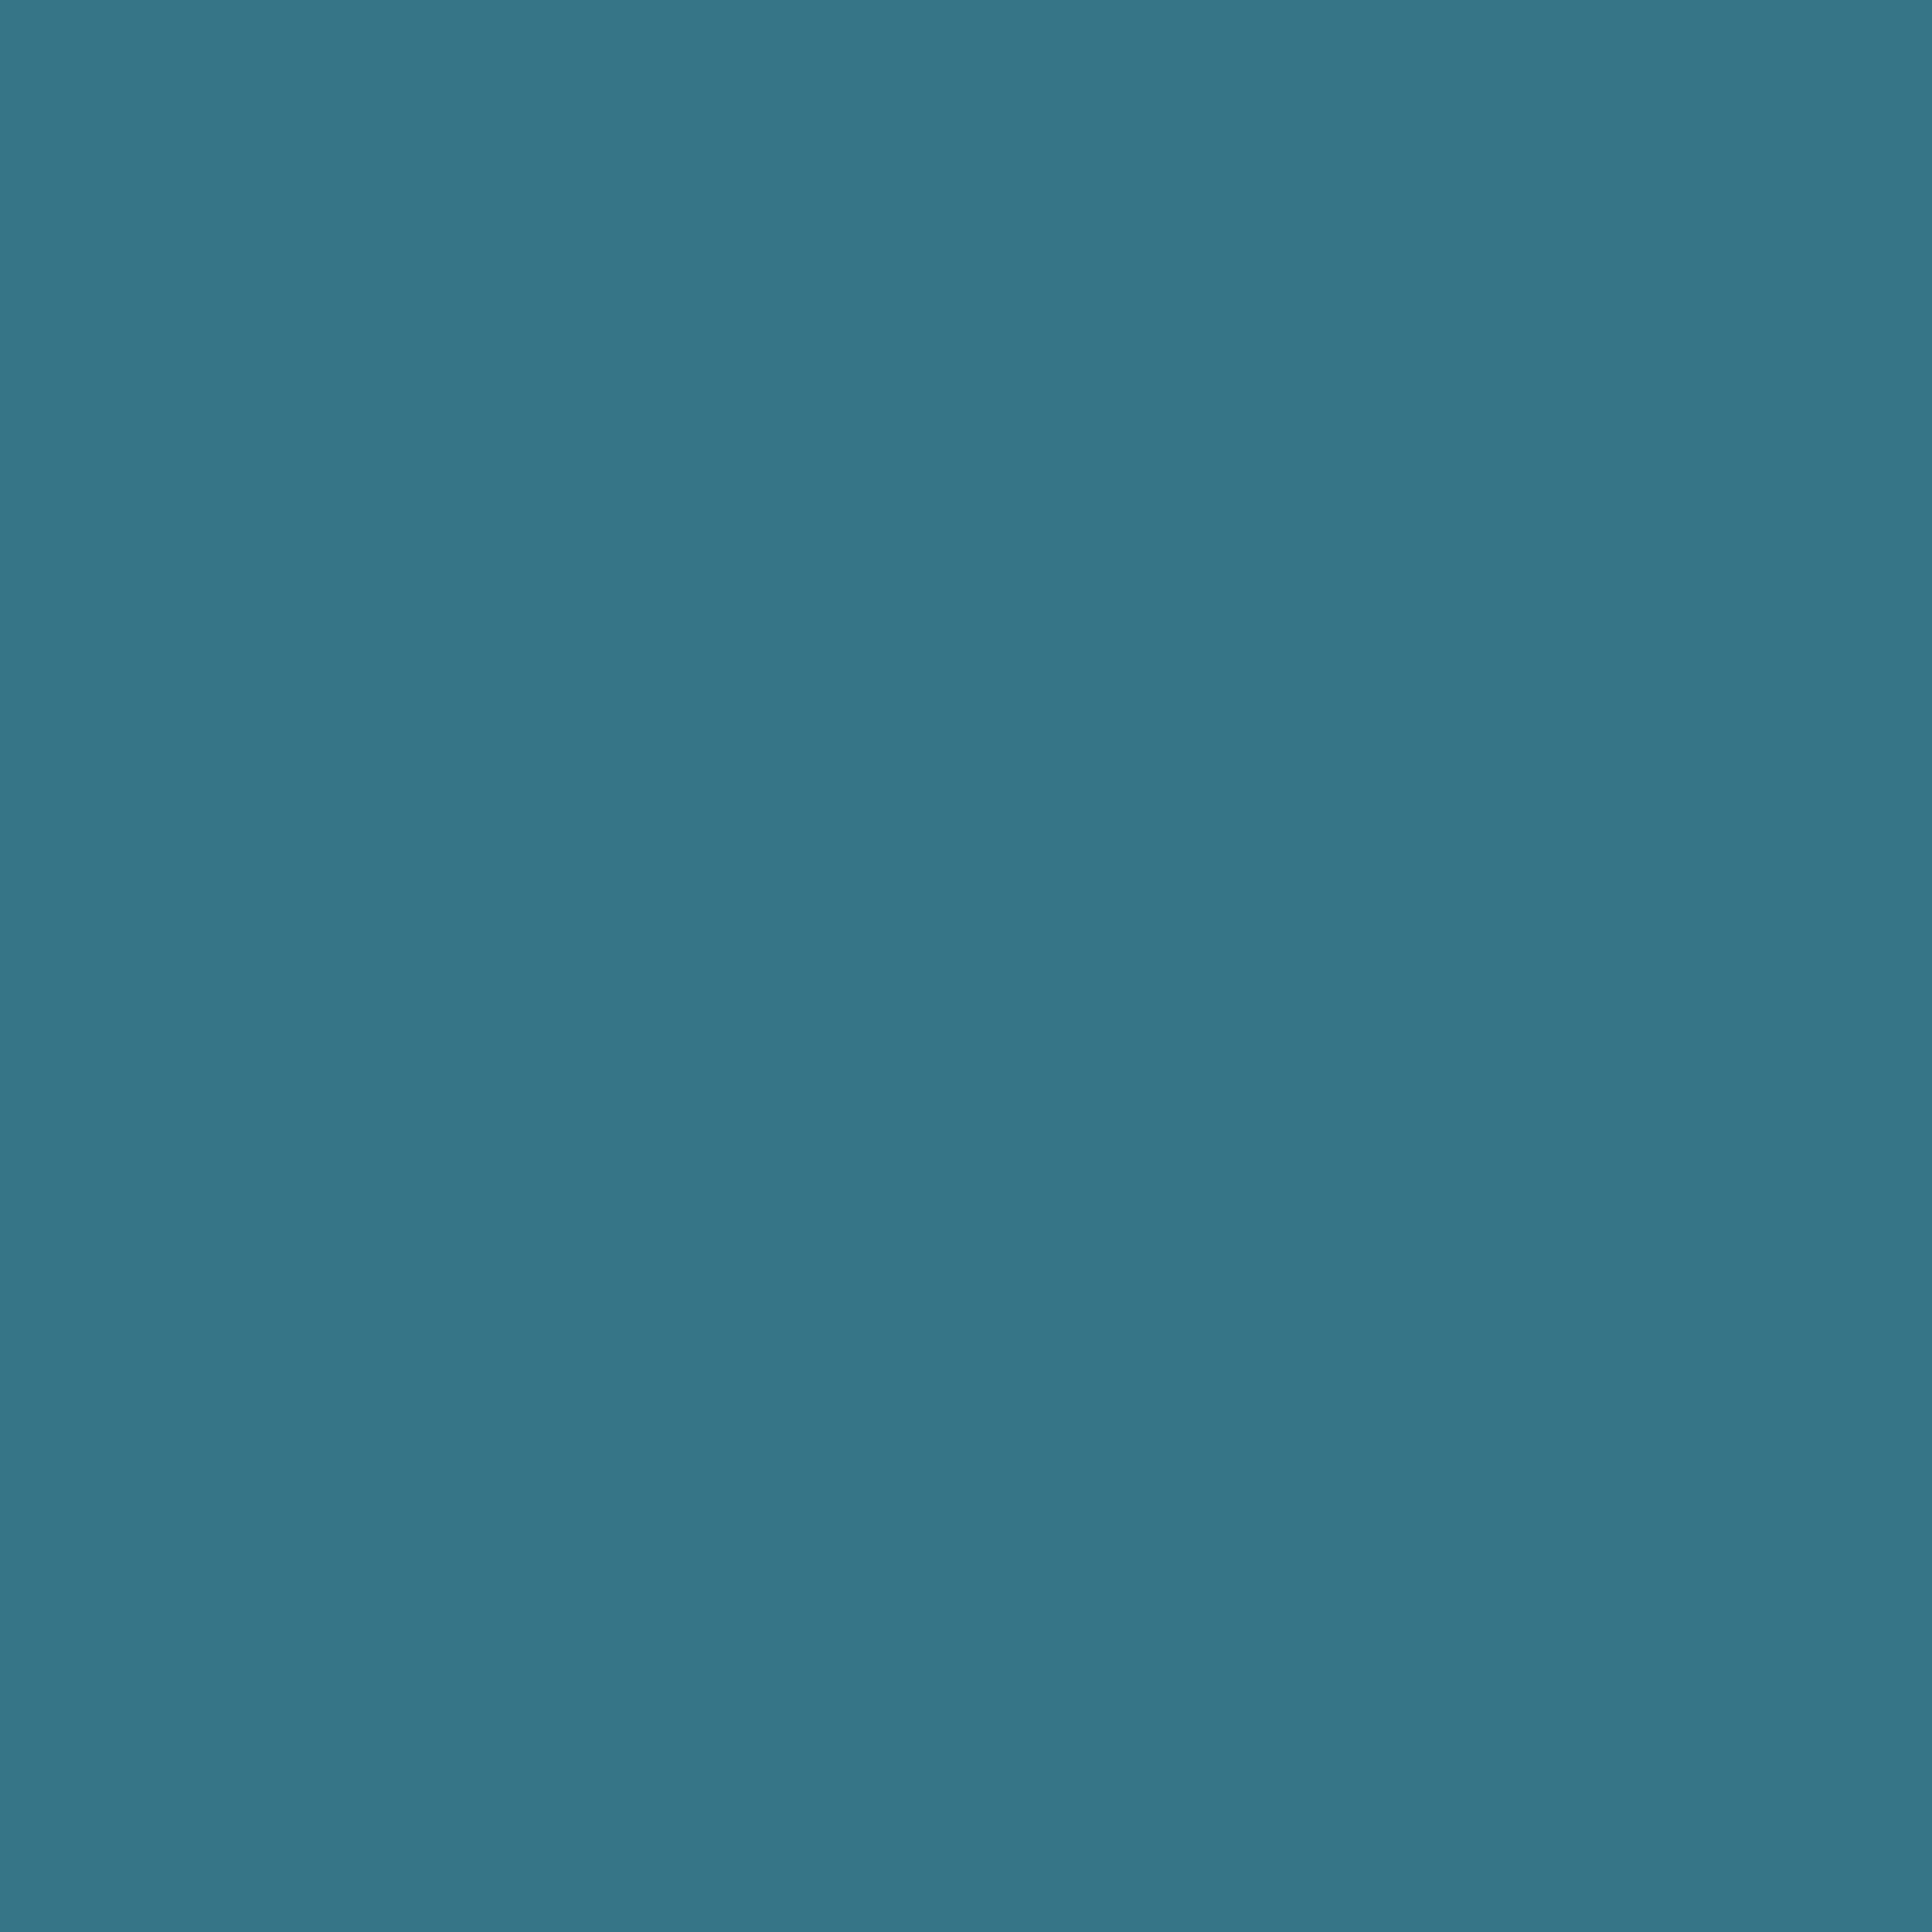 2048x2048 Teal Blue Solid Color Background